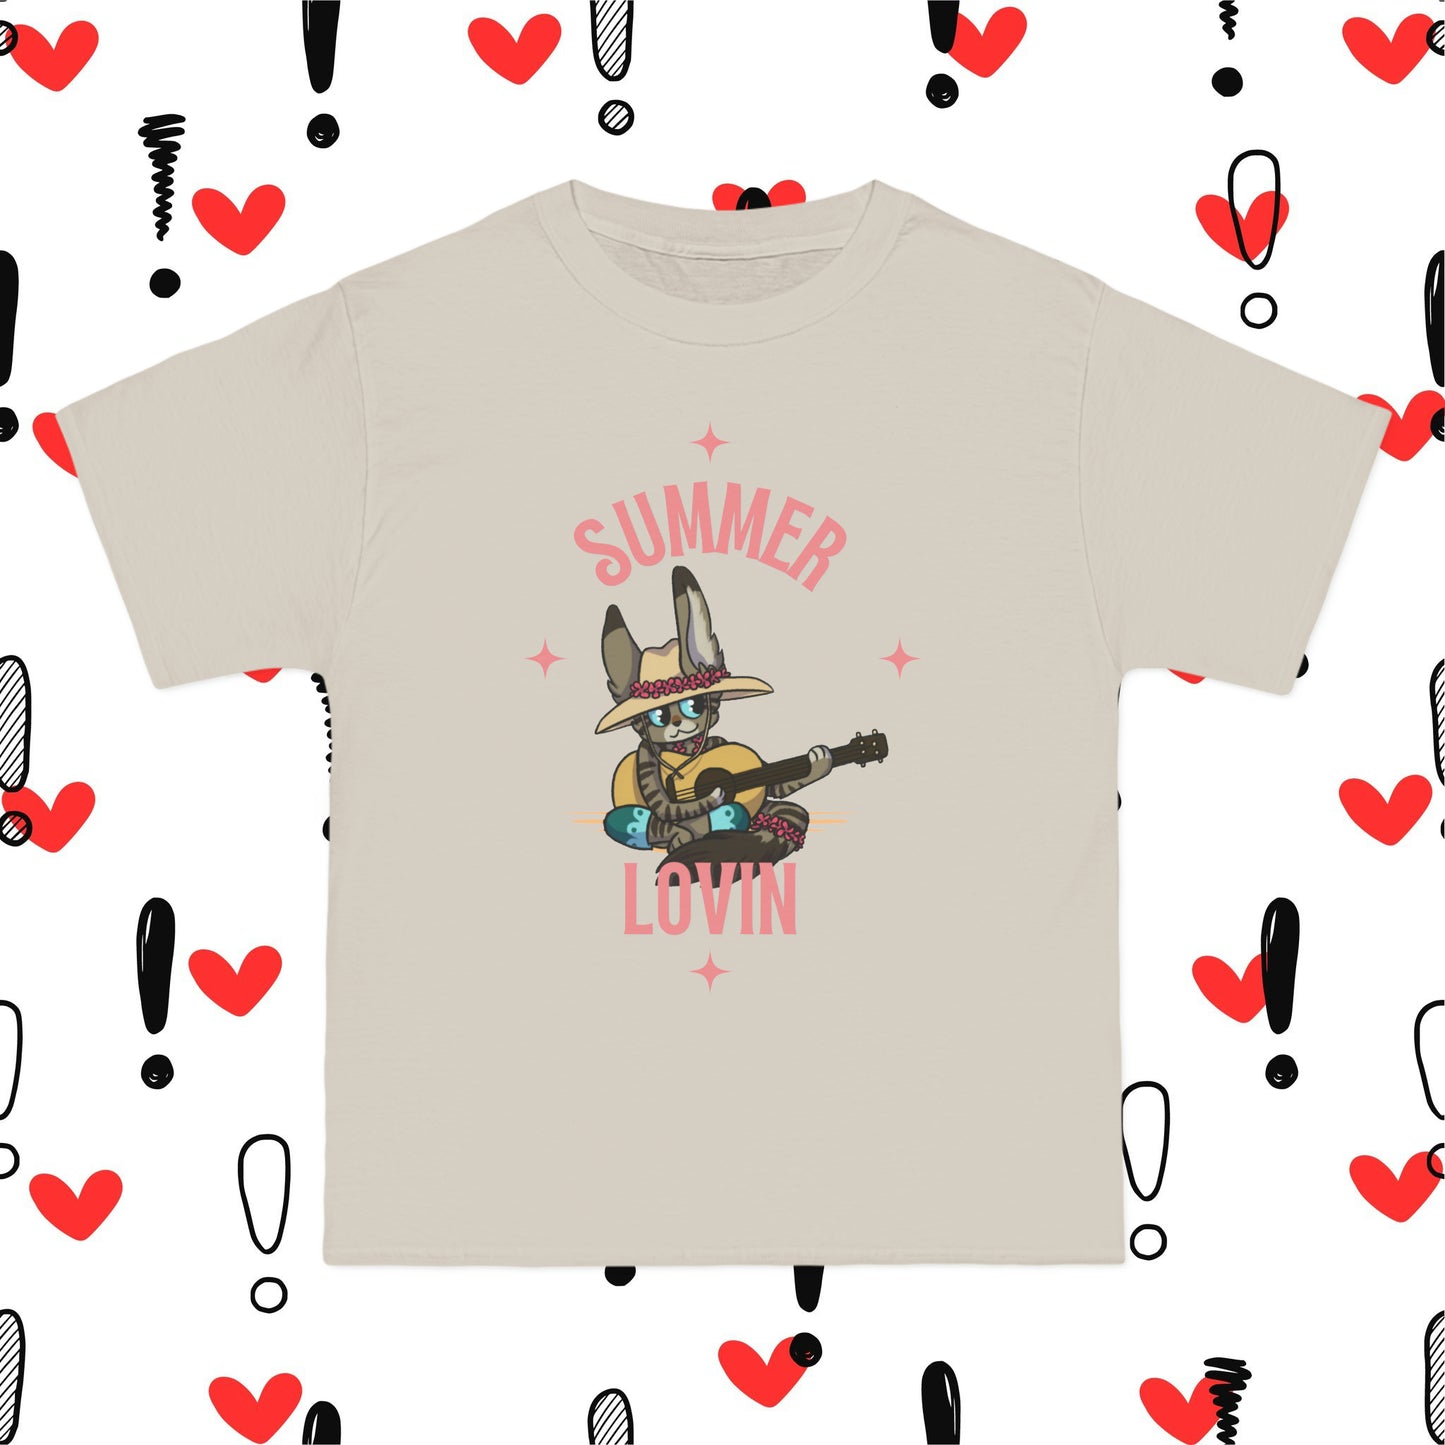 Summer Lovin' -  Super Soft Beefy-T®  Short-Sleeve T-Shirt